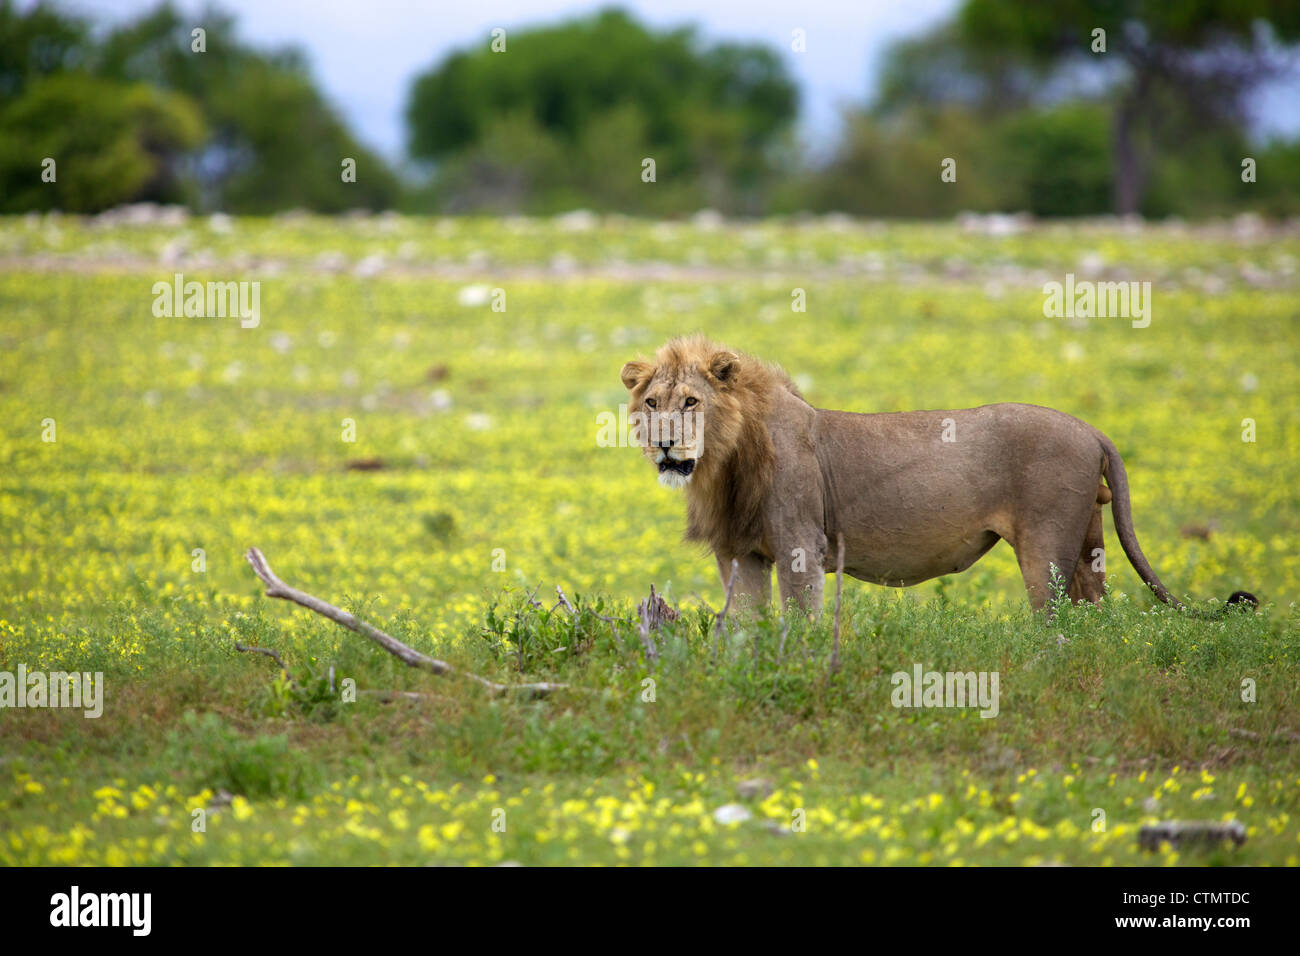 A wide angle view of a Lion standing amongst wild flowers, Etosha National Park, Etosha, Namibia Stock Photo